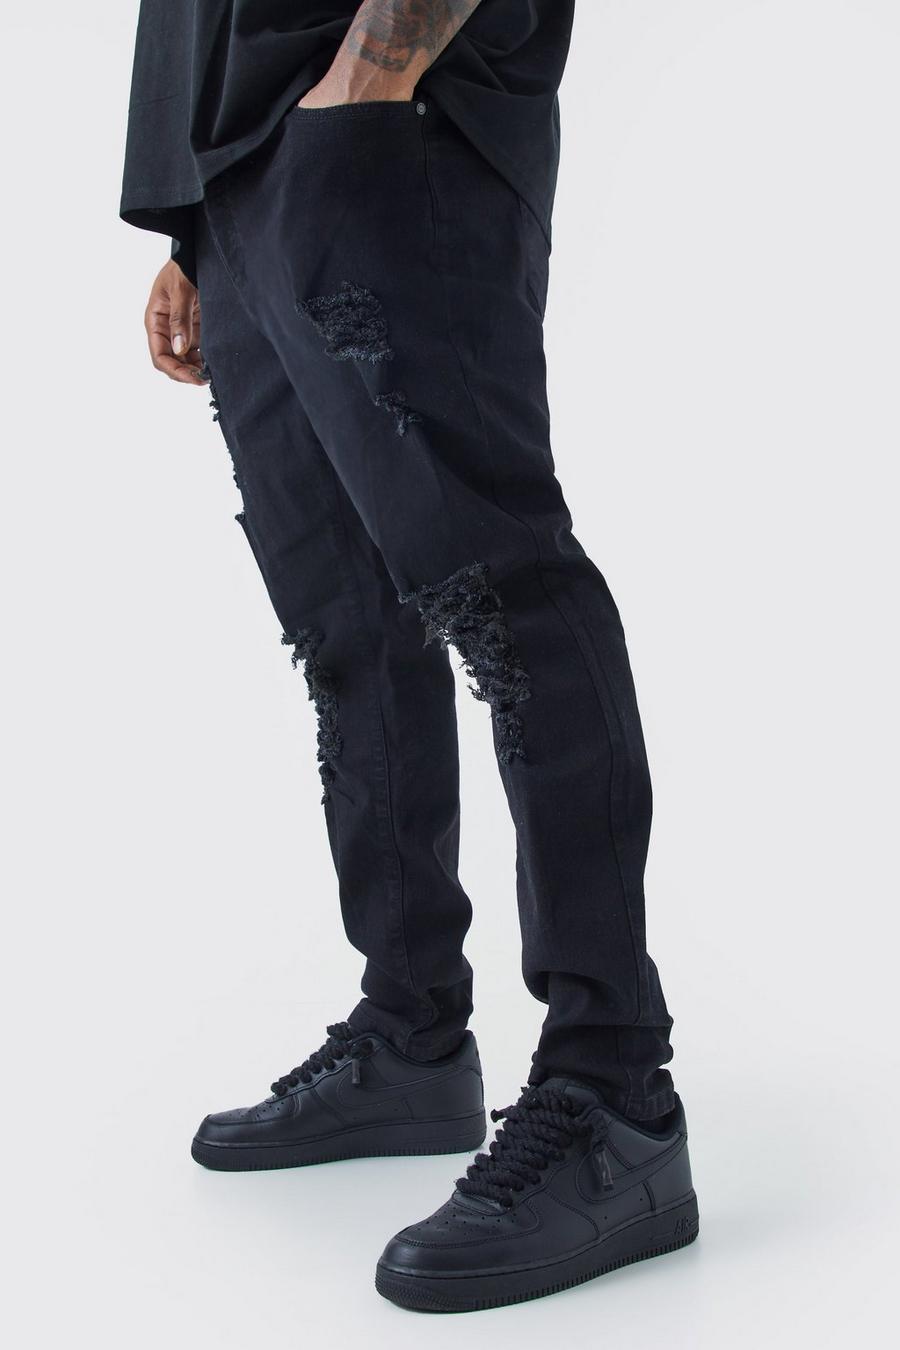 Jeans Plus Size Skinny Fit con strappi all over, True black